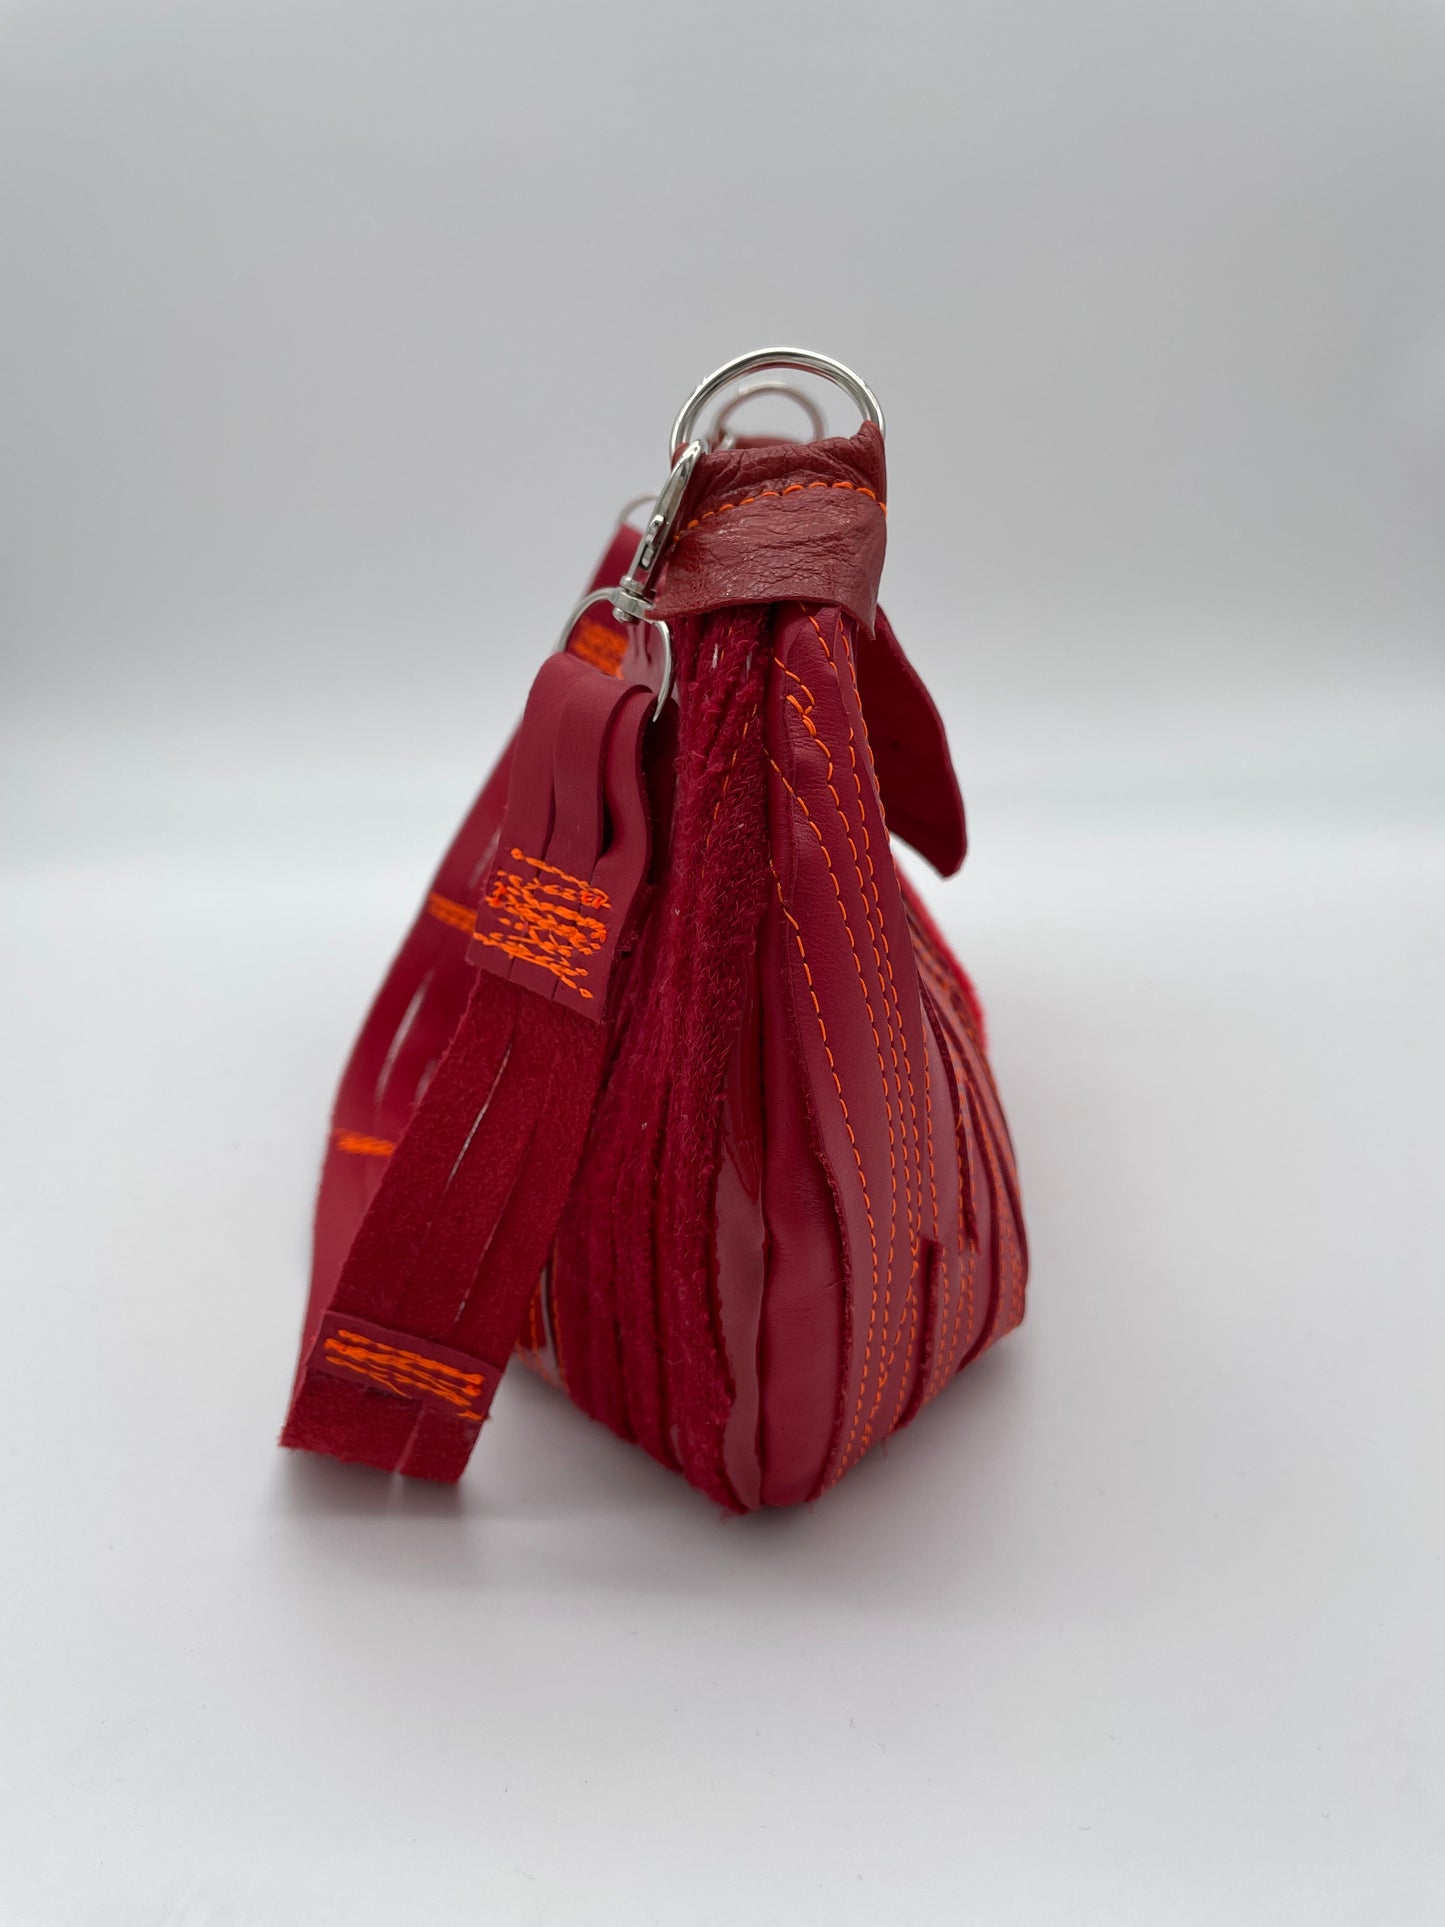 Upcycled bag red handmade bag leftover fabrics checkered repurposed one of a kind leather bag handbag